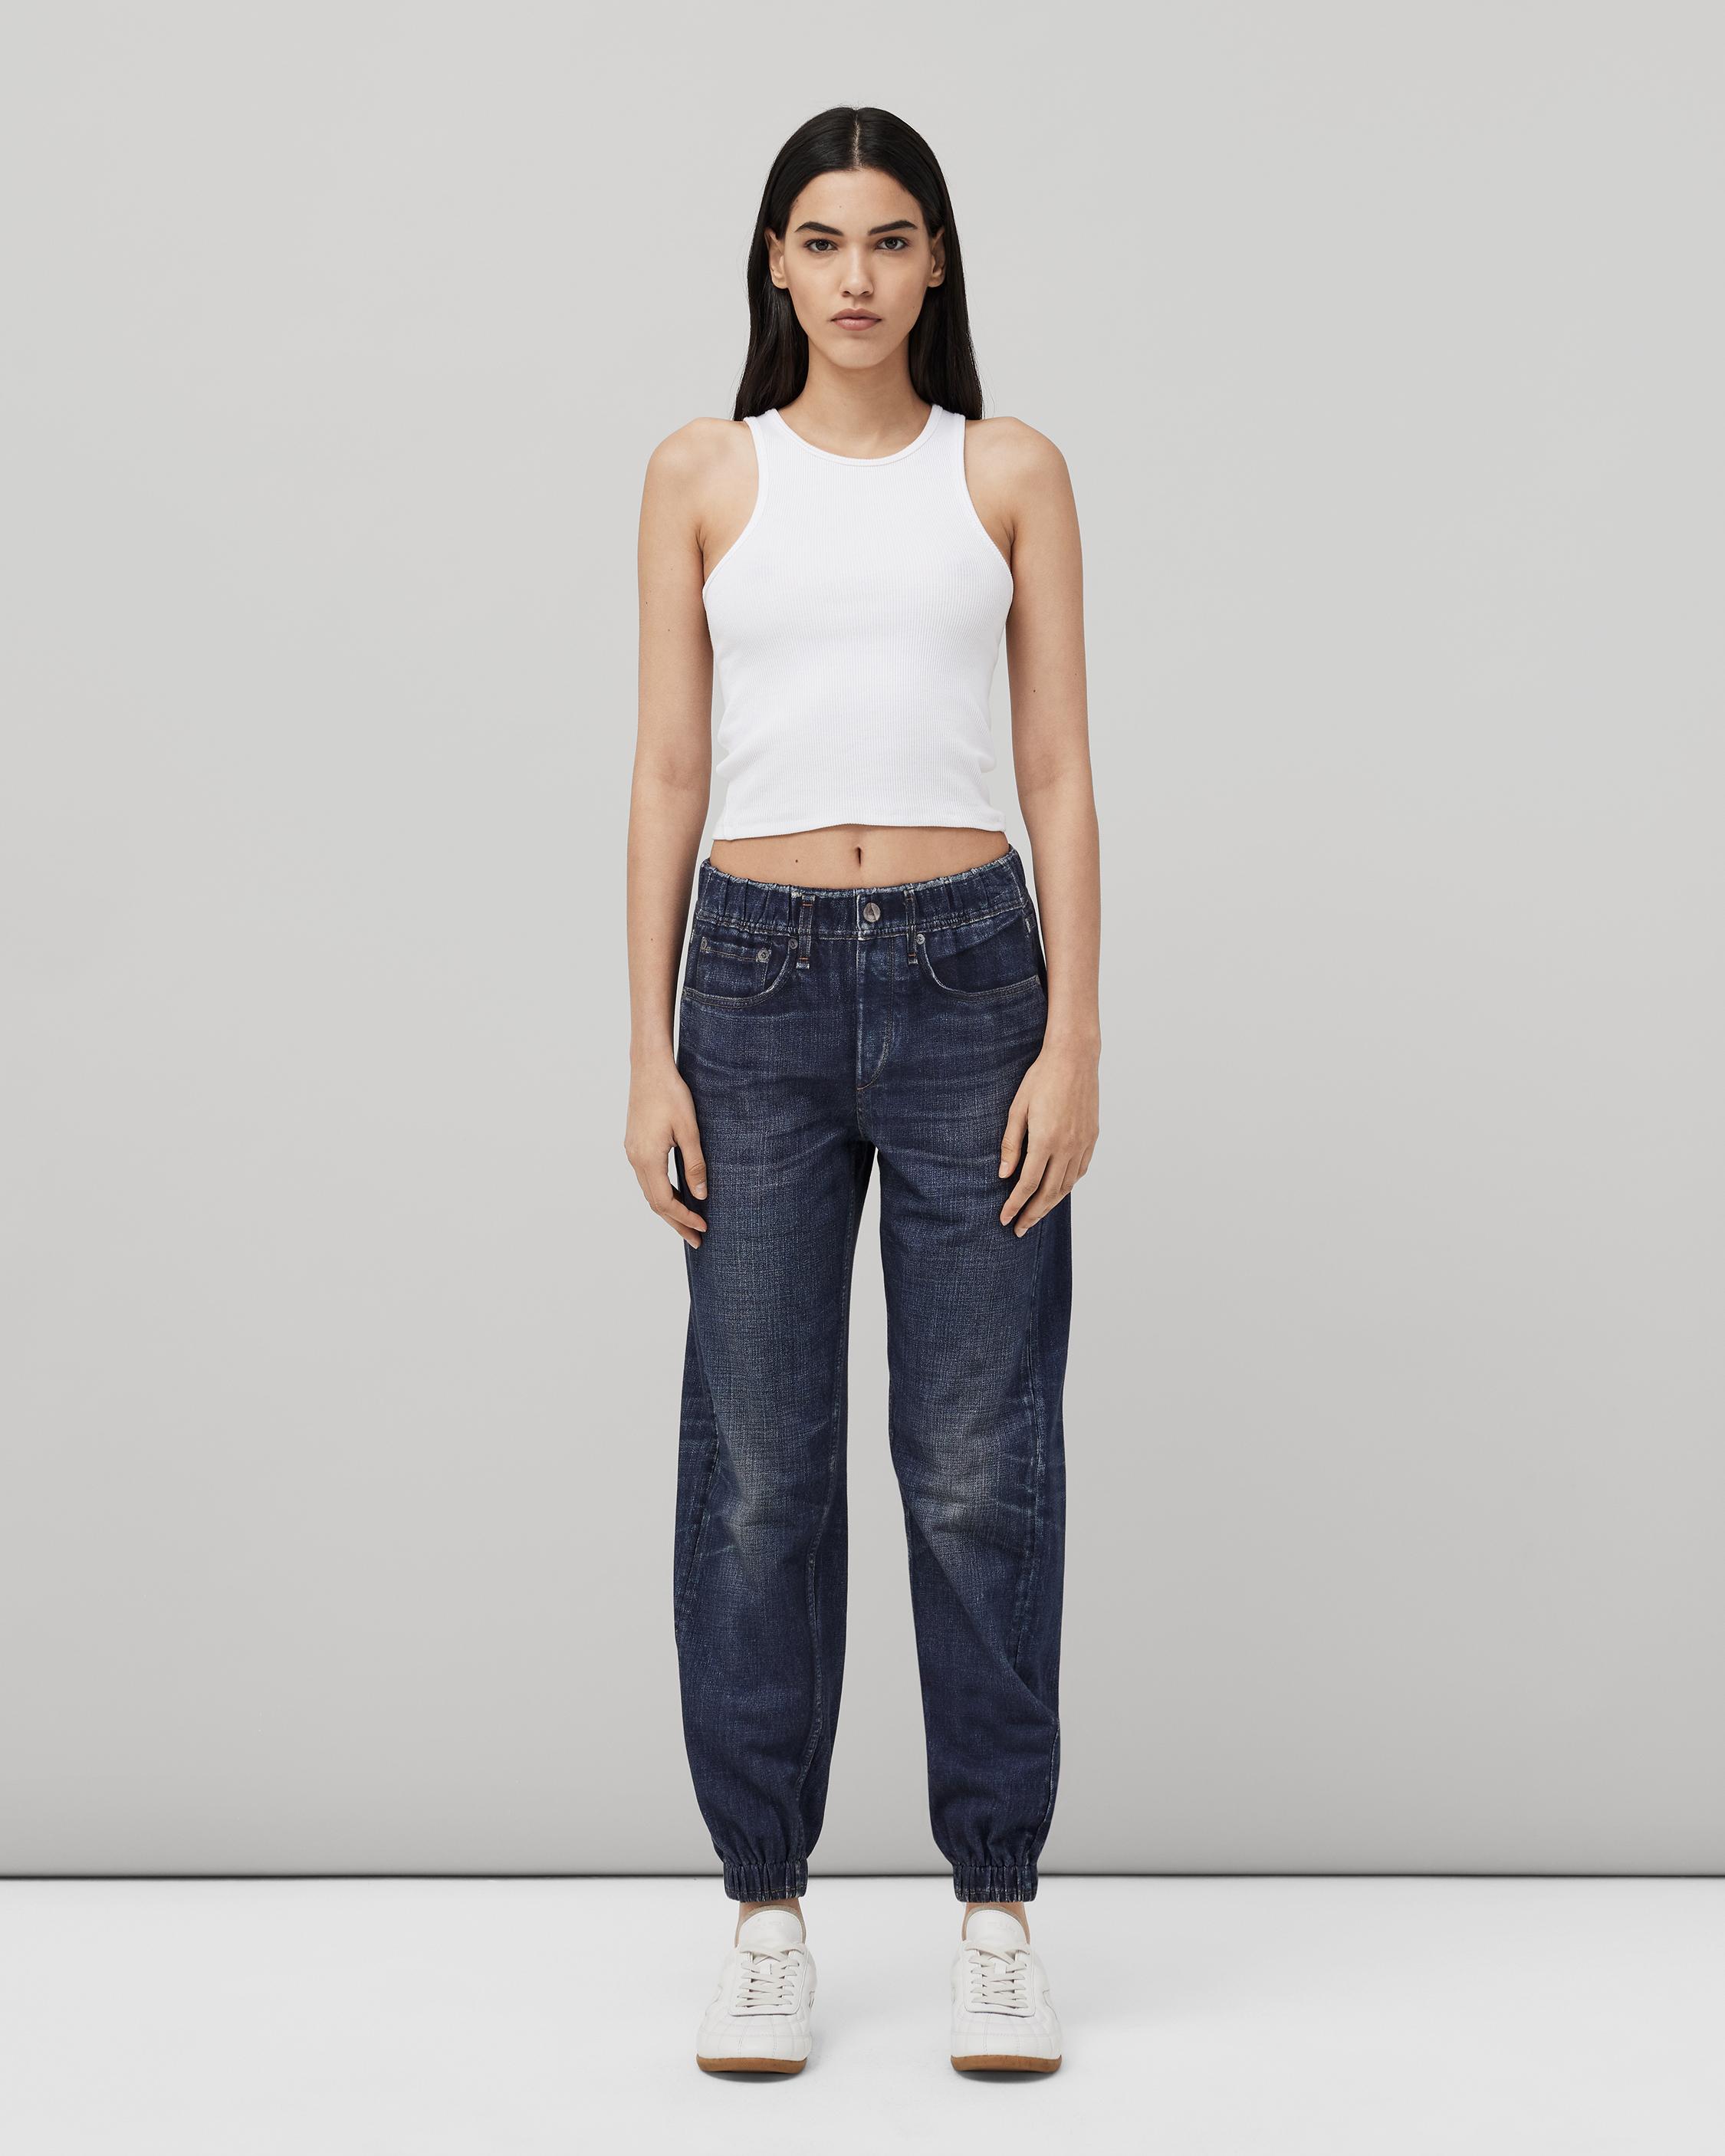 bånd blanding sekundær Miramar Jogger Sweatpants, Printed to Look like Denim Jeans